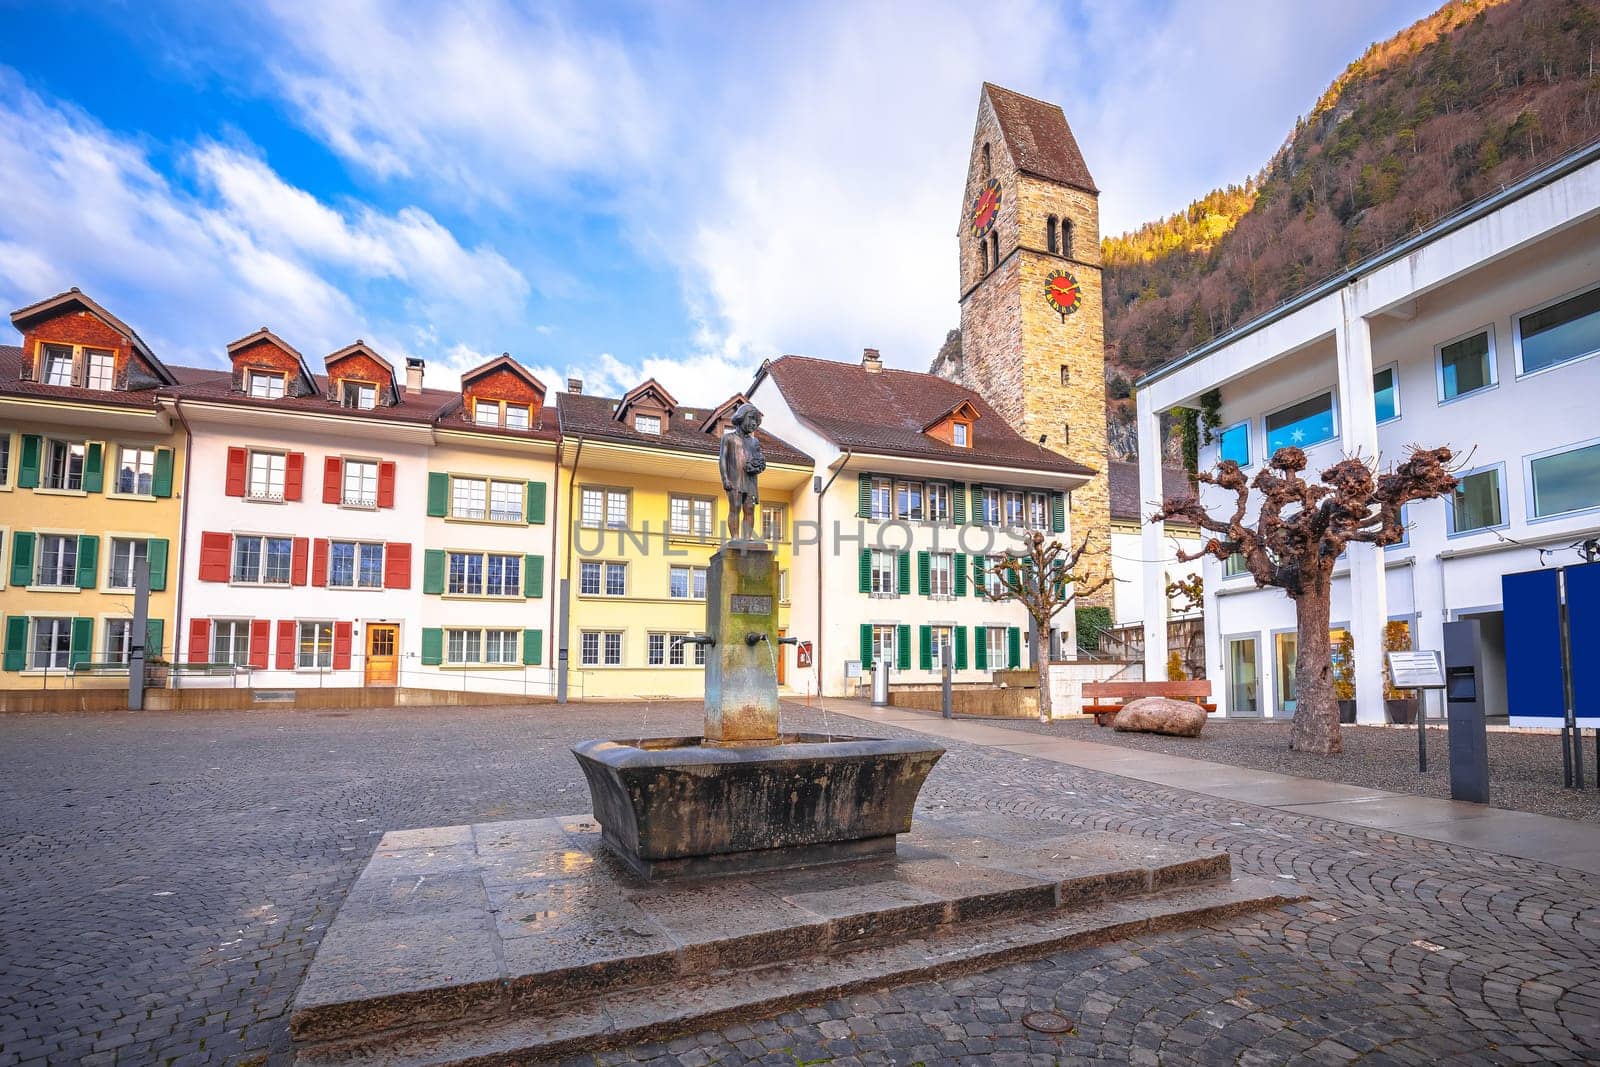 Town of Interlaken square colorful architecture view, Berner Oberland region of Switzerland